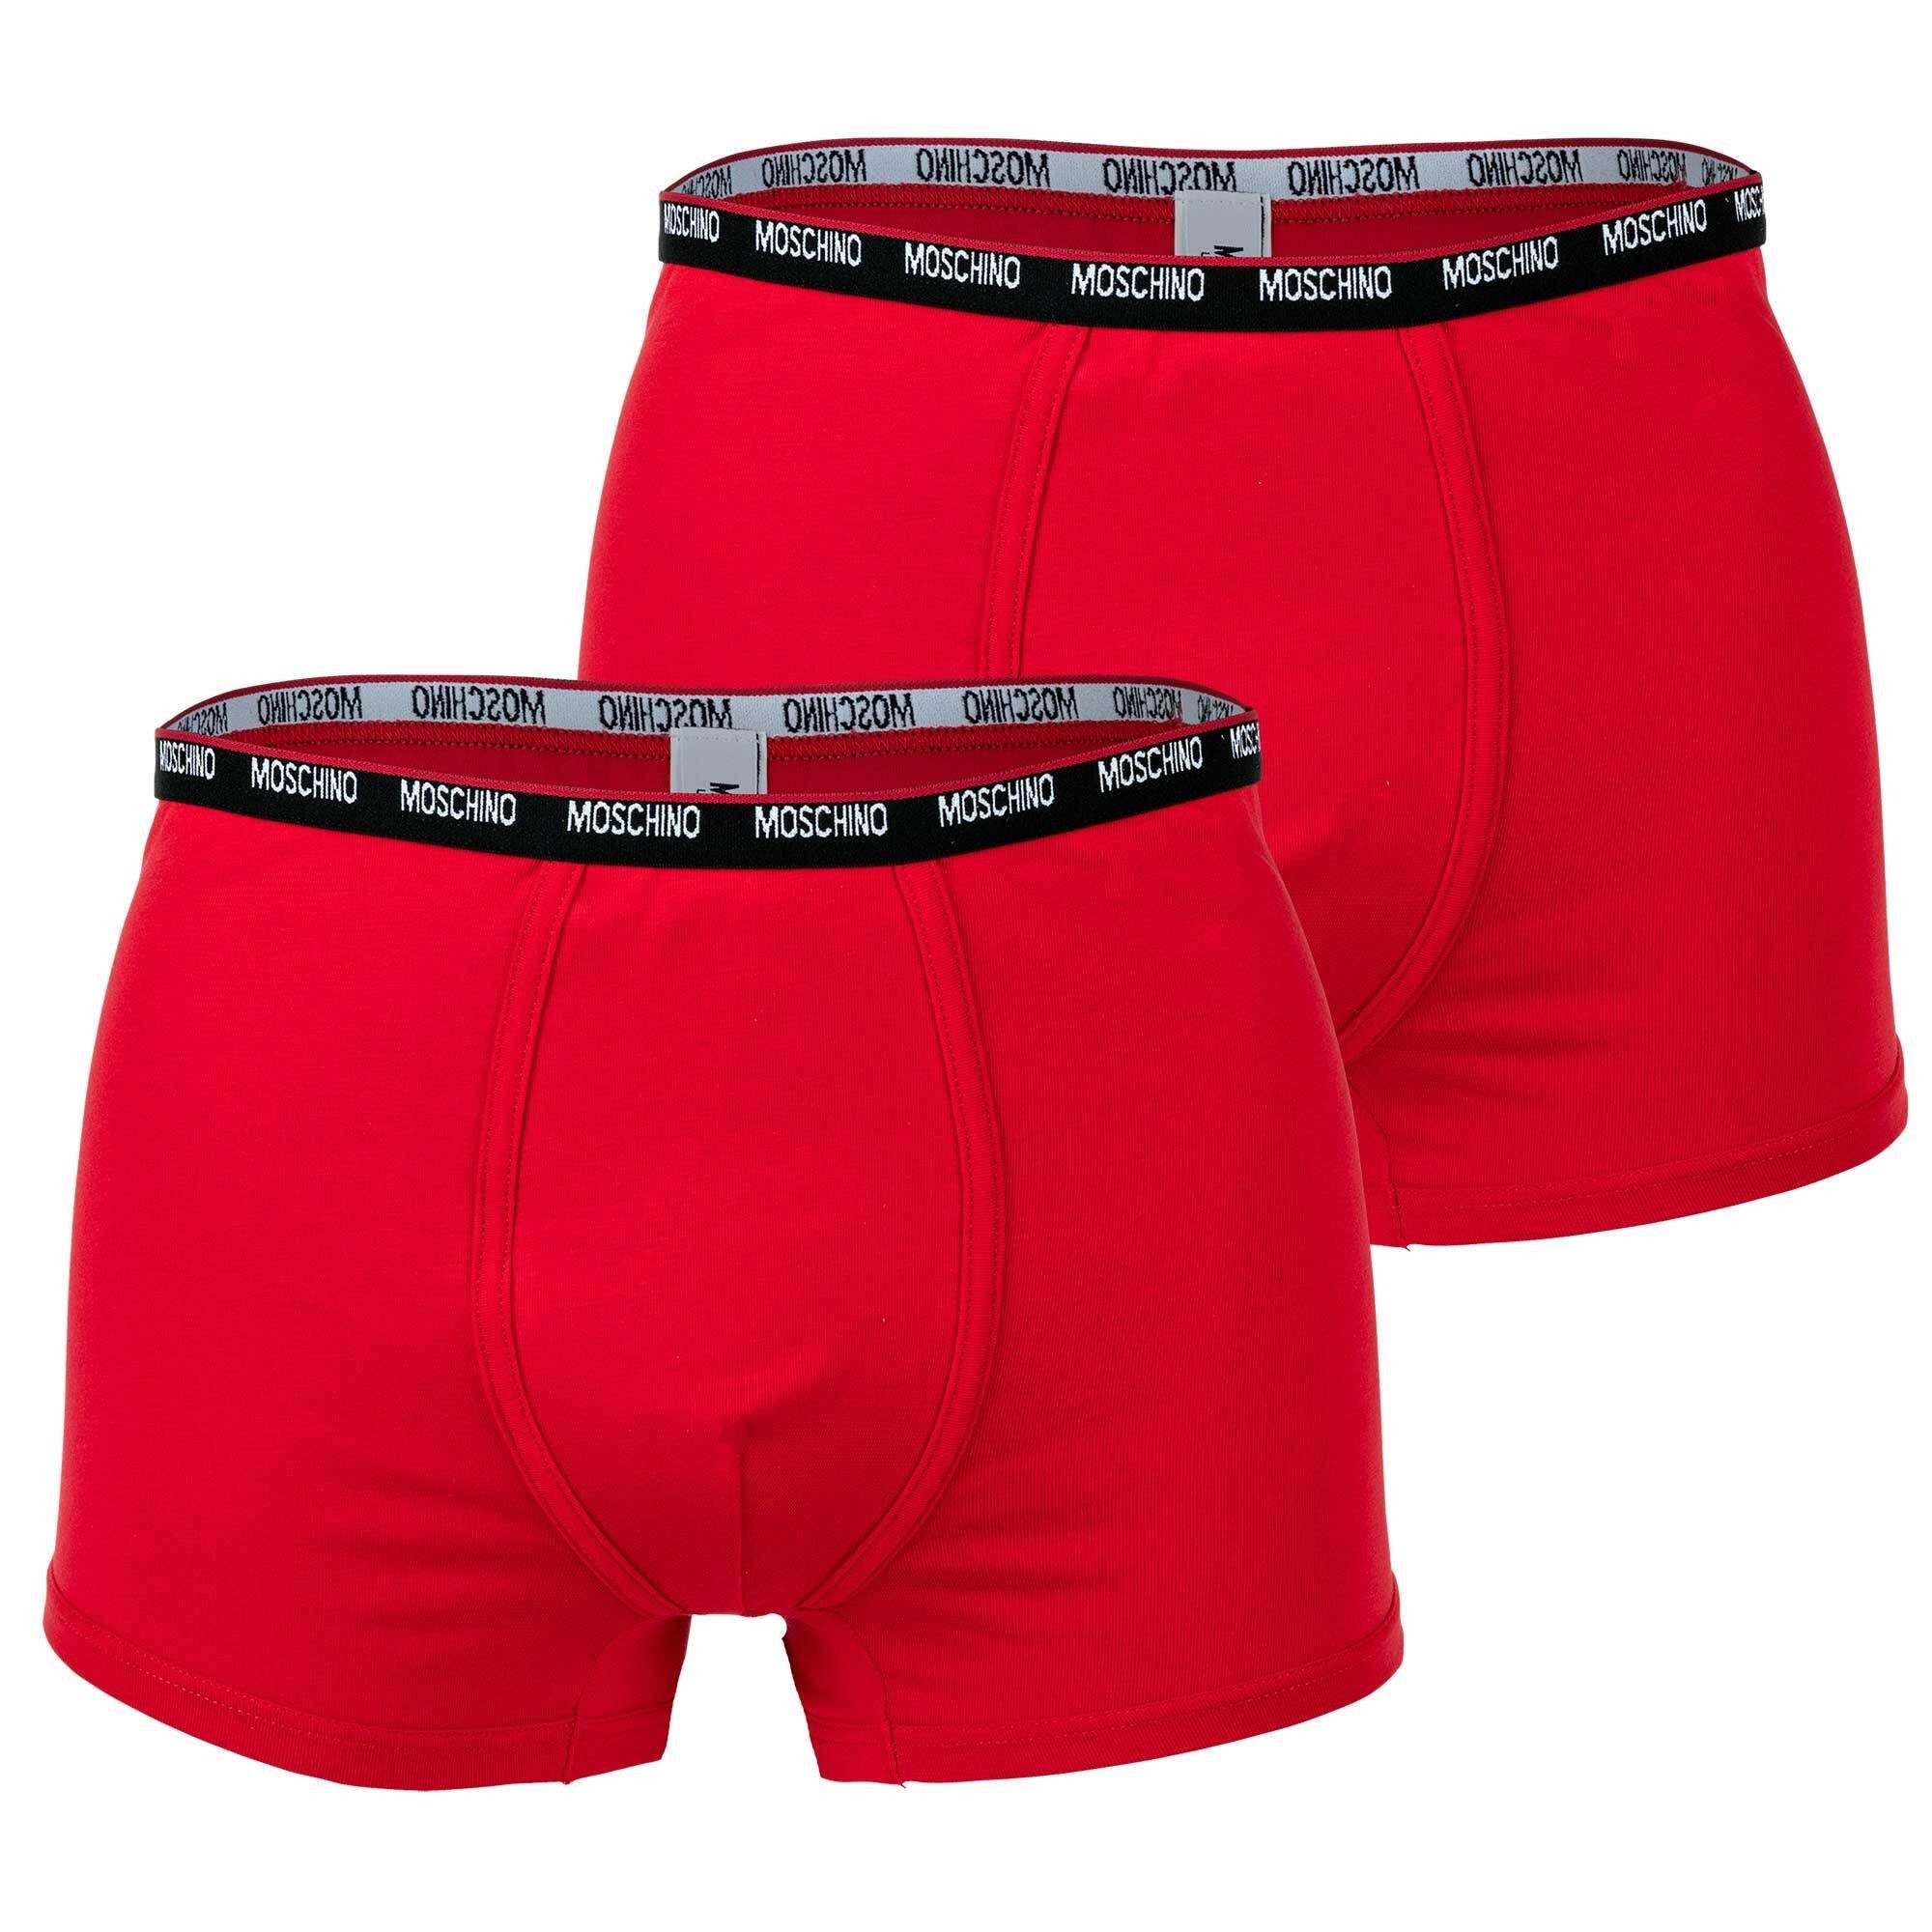 Moschino Boxer Herren Shorts 2er Pack - Trunks, Unterhose, Cotton Rot